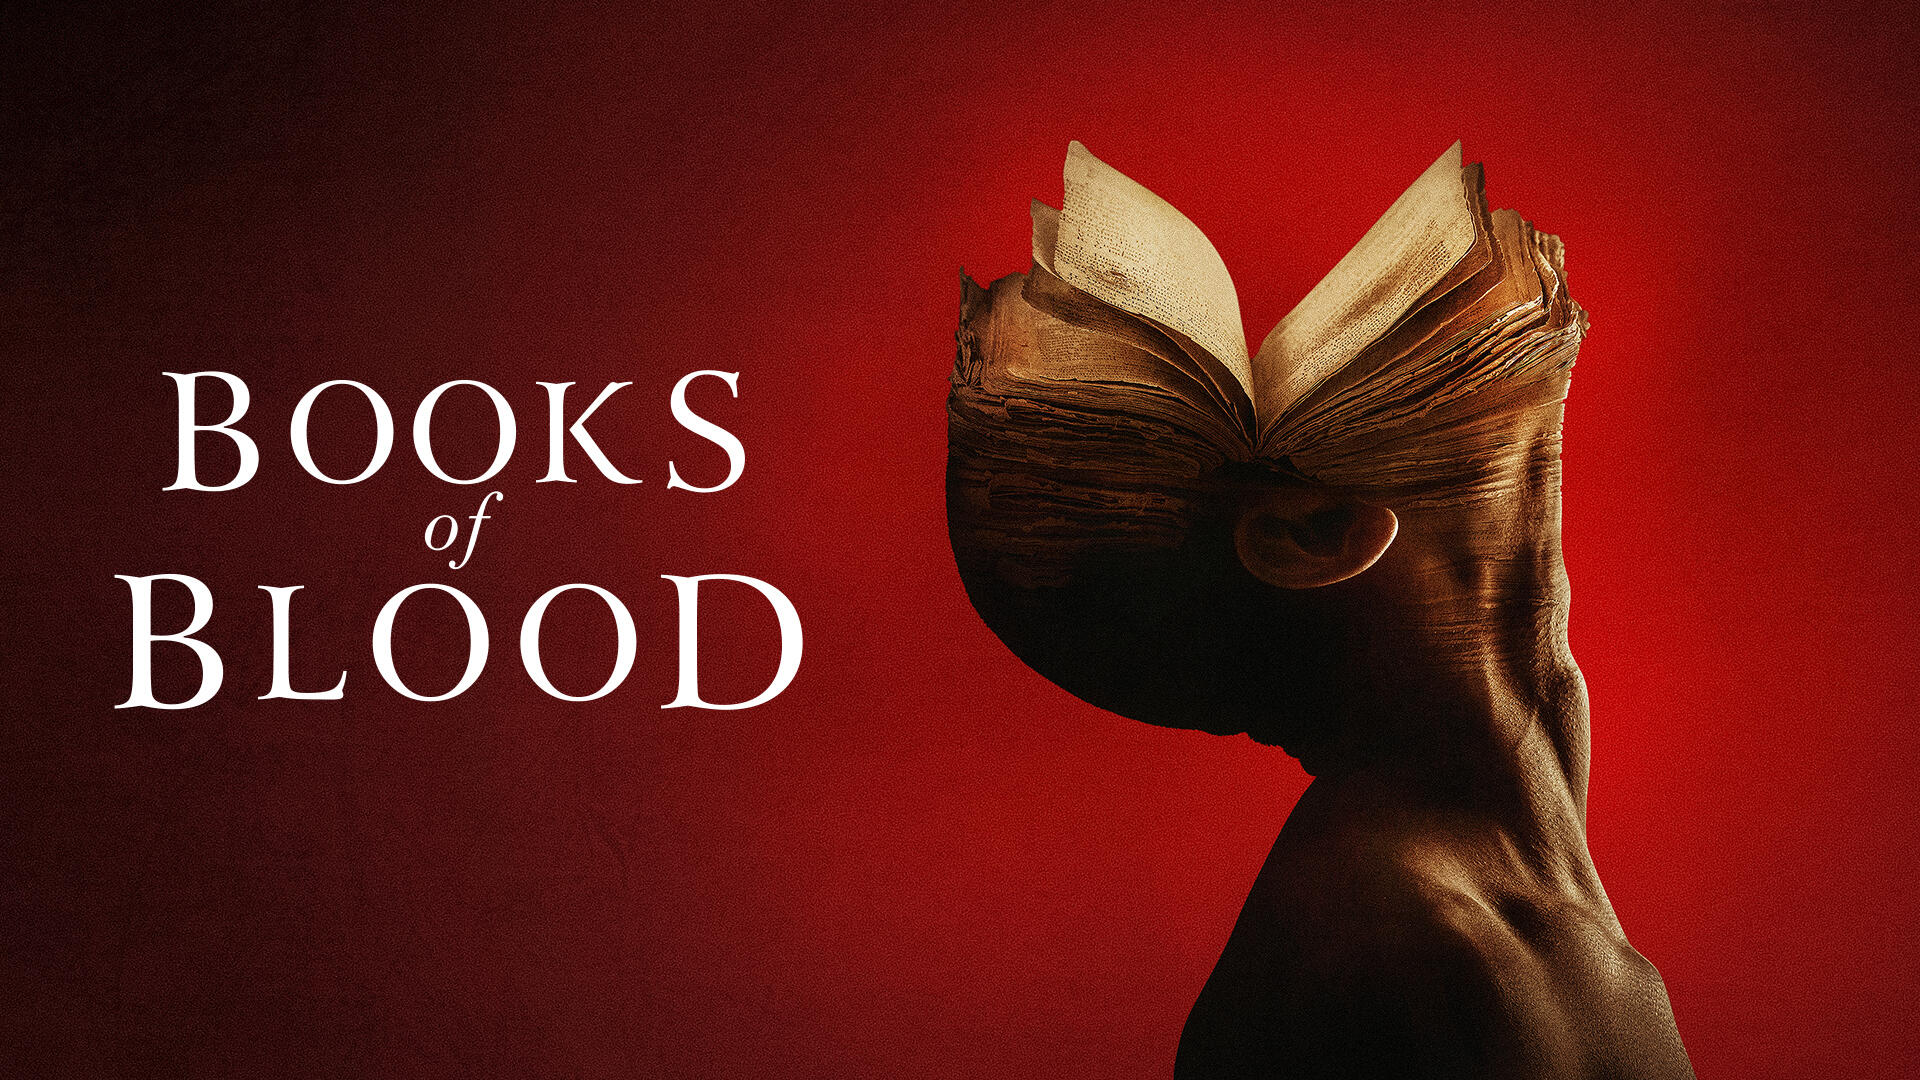 Books_Of_Blood_16x9